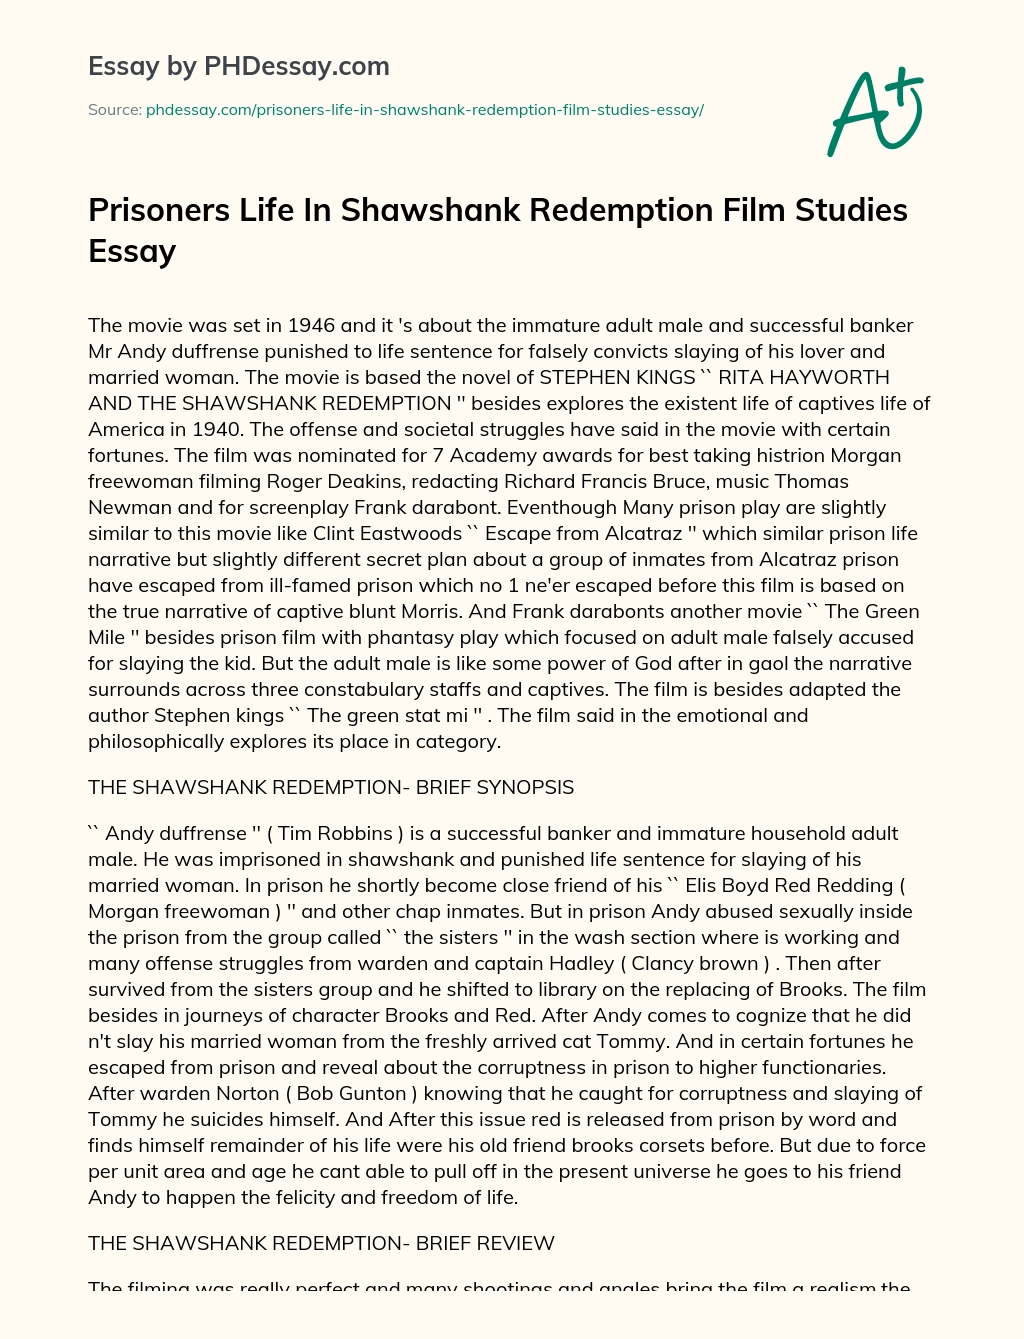 shawshank redemption character analysis essay